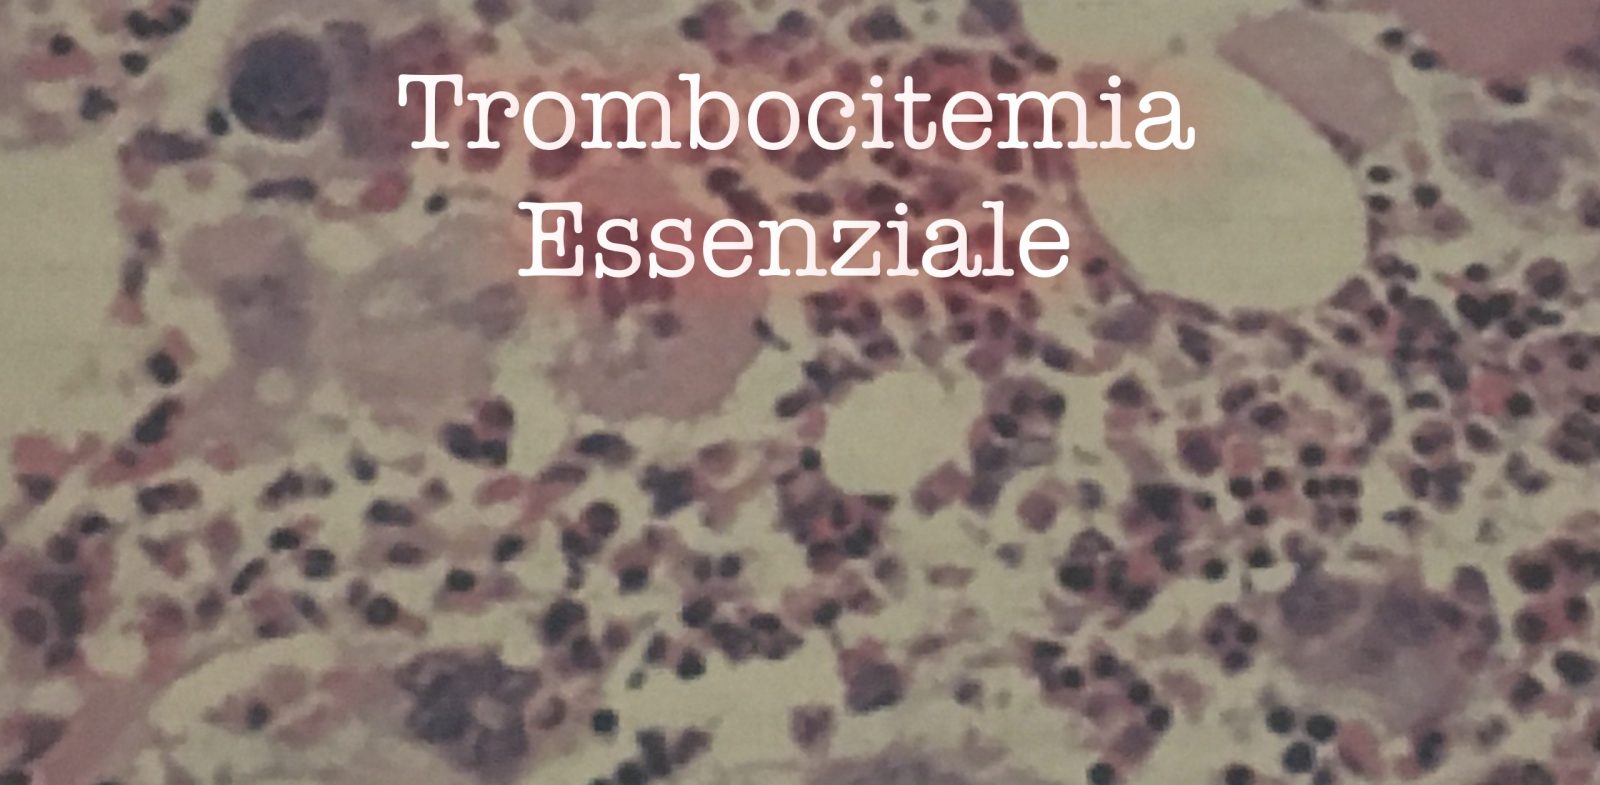 Trombocitemia essenziale